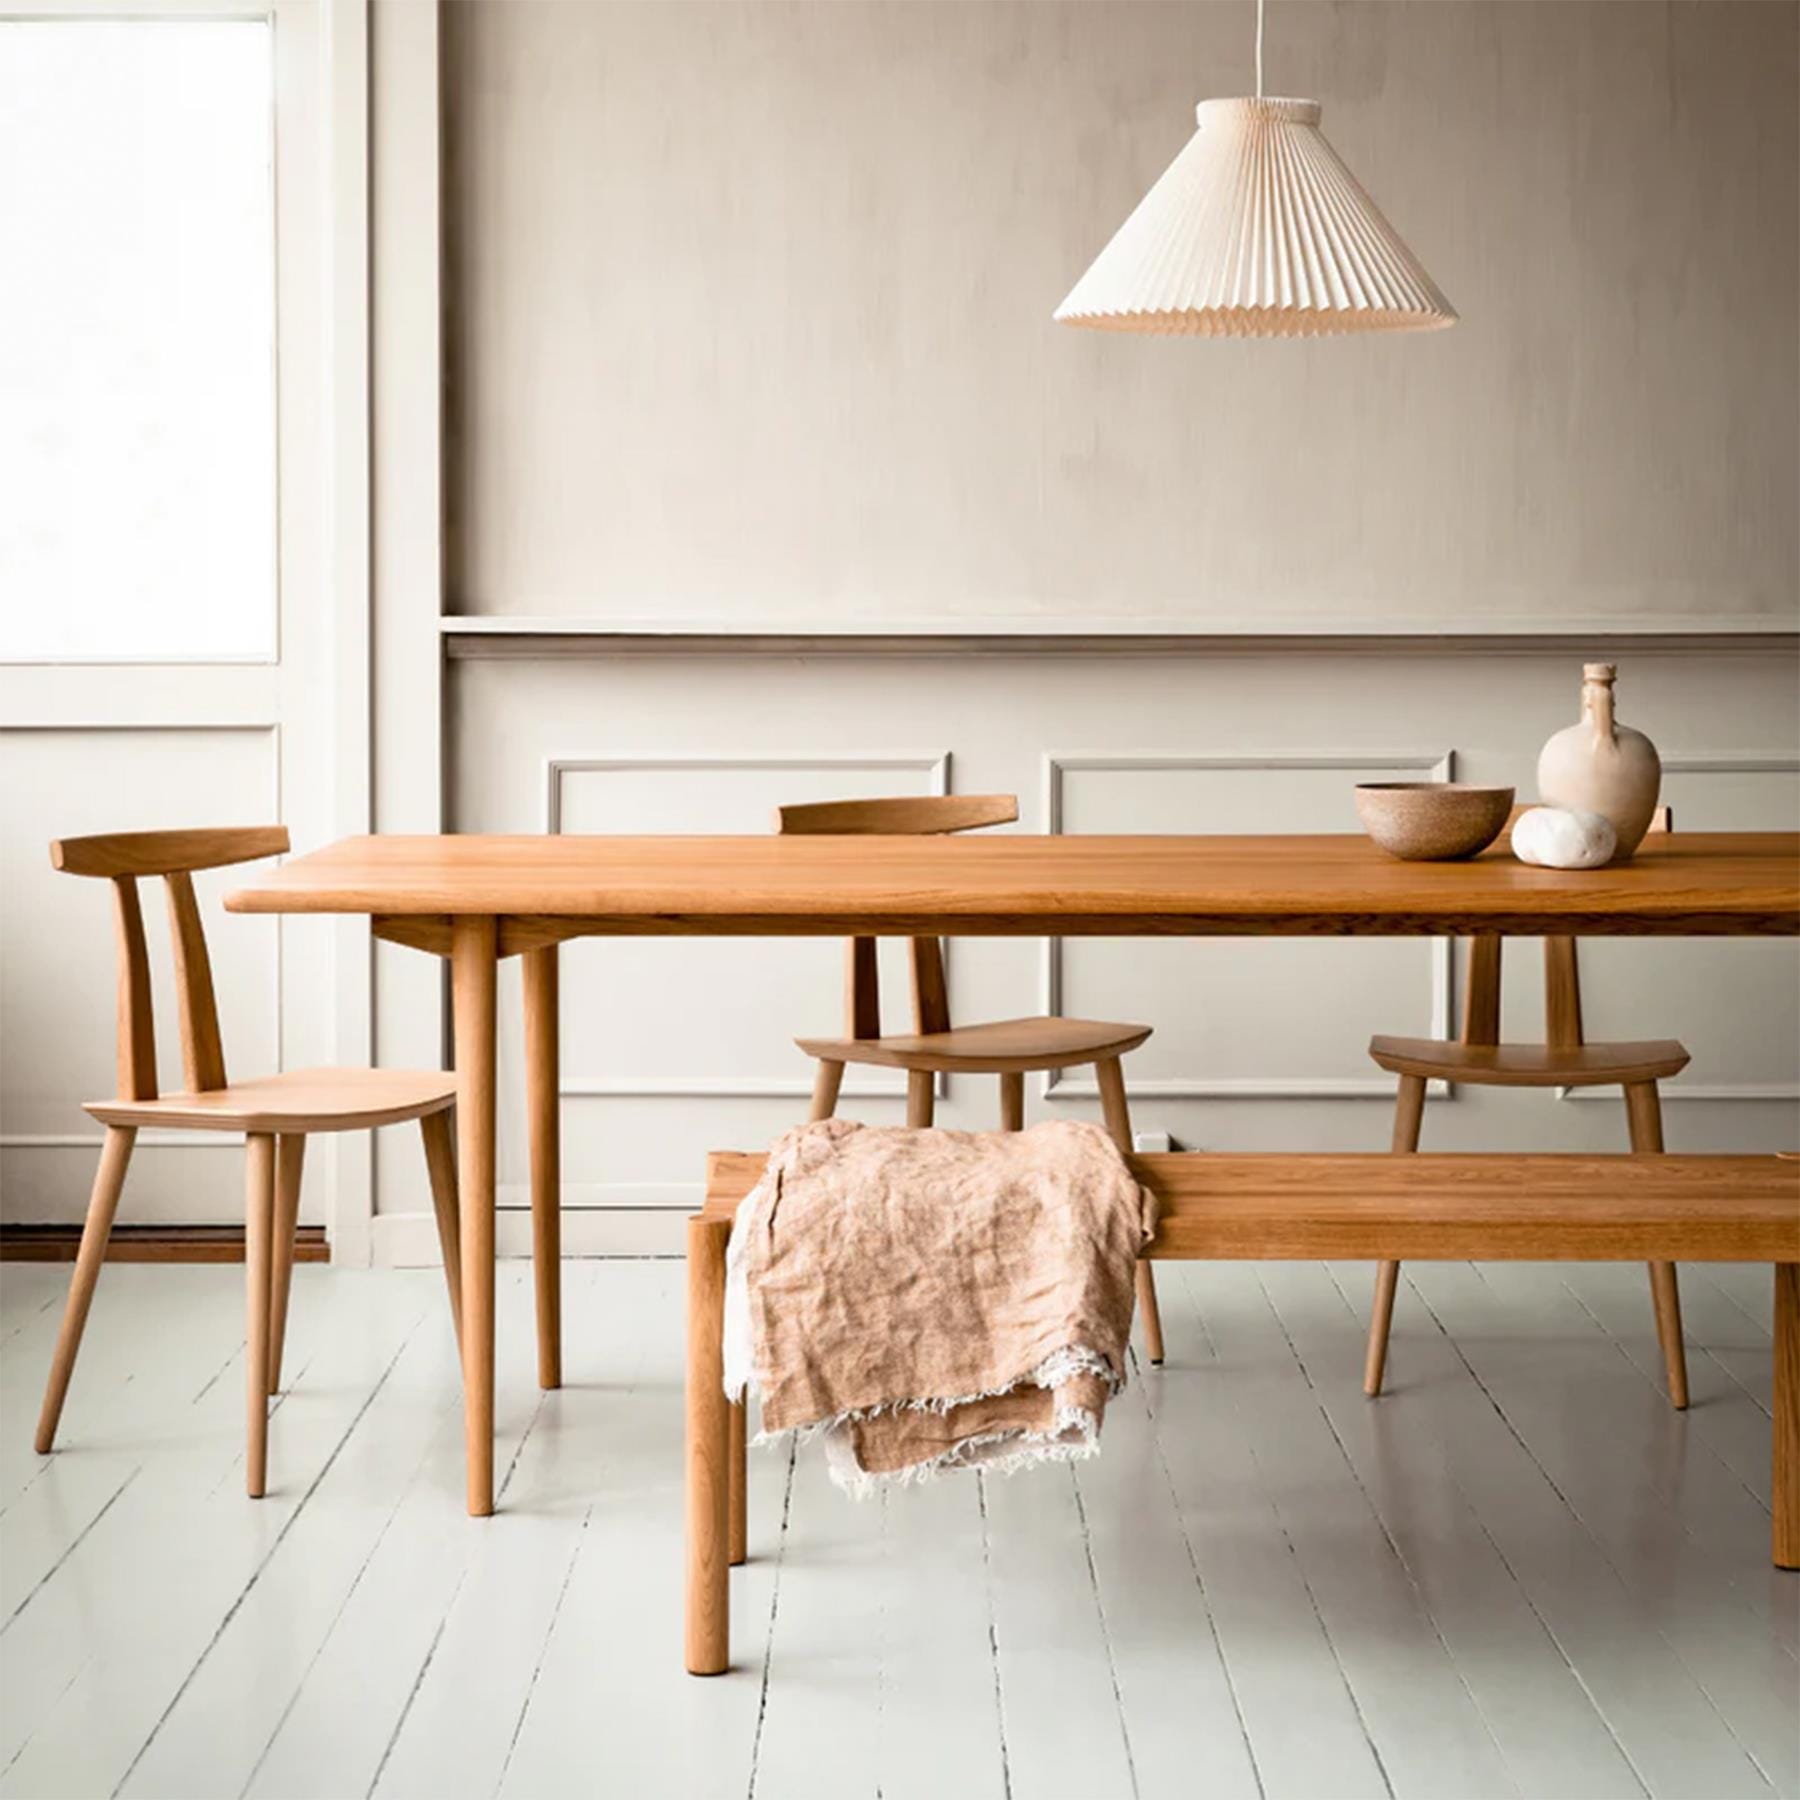 Make Nordic Holmen Rectangular Dining Table Large Natural Oak Length 260cm Width 92cm With 2 Extra Leaves Light Wood Designer Furniture From